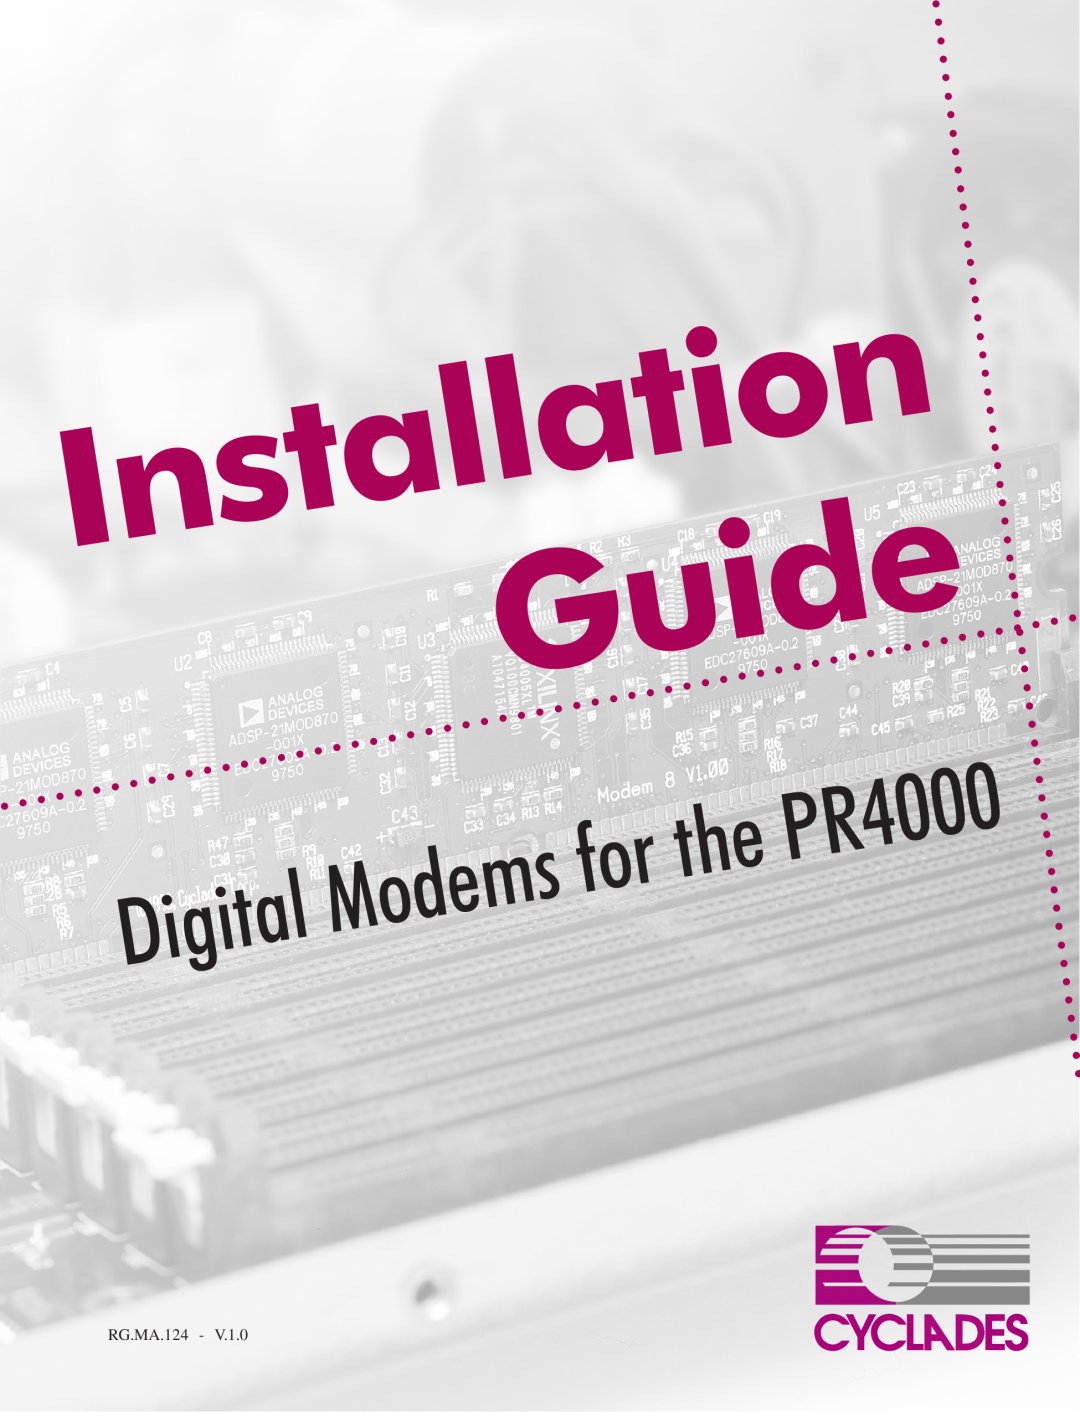 Cyclades manual Installation Guide, Digital, forthePR4000, Modems, RG.MA.124 